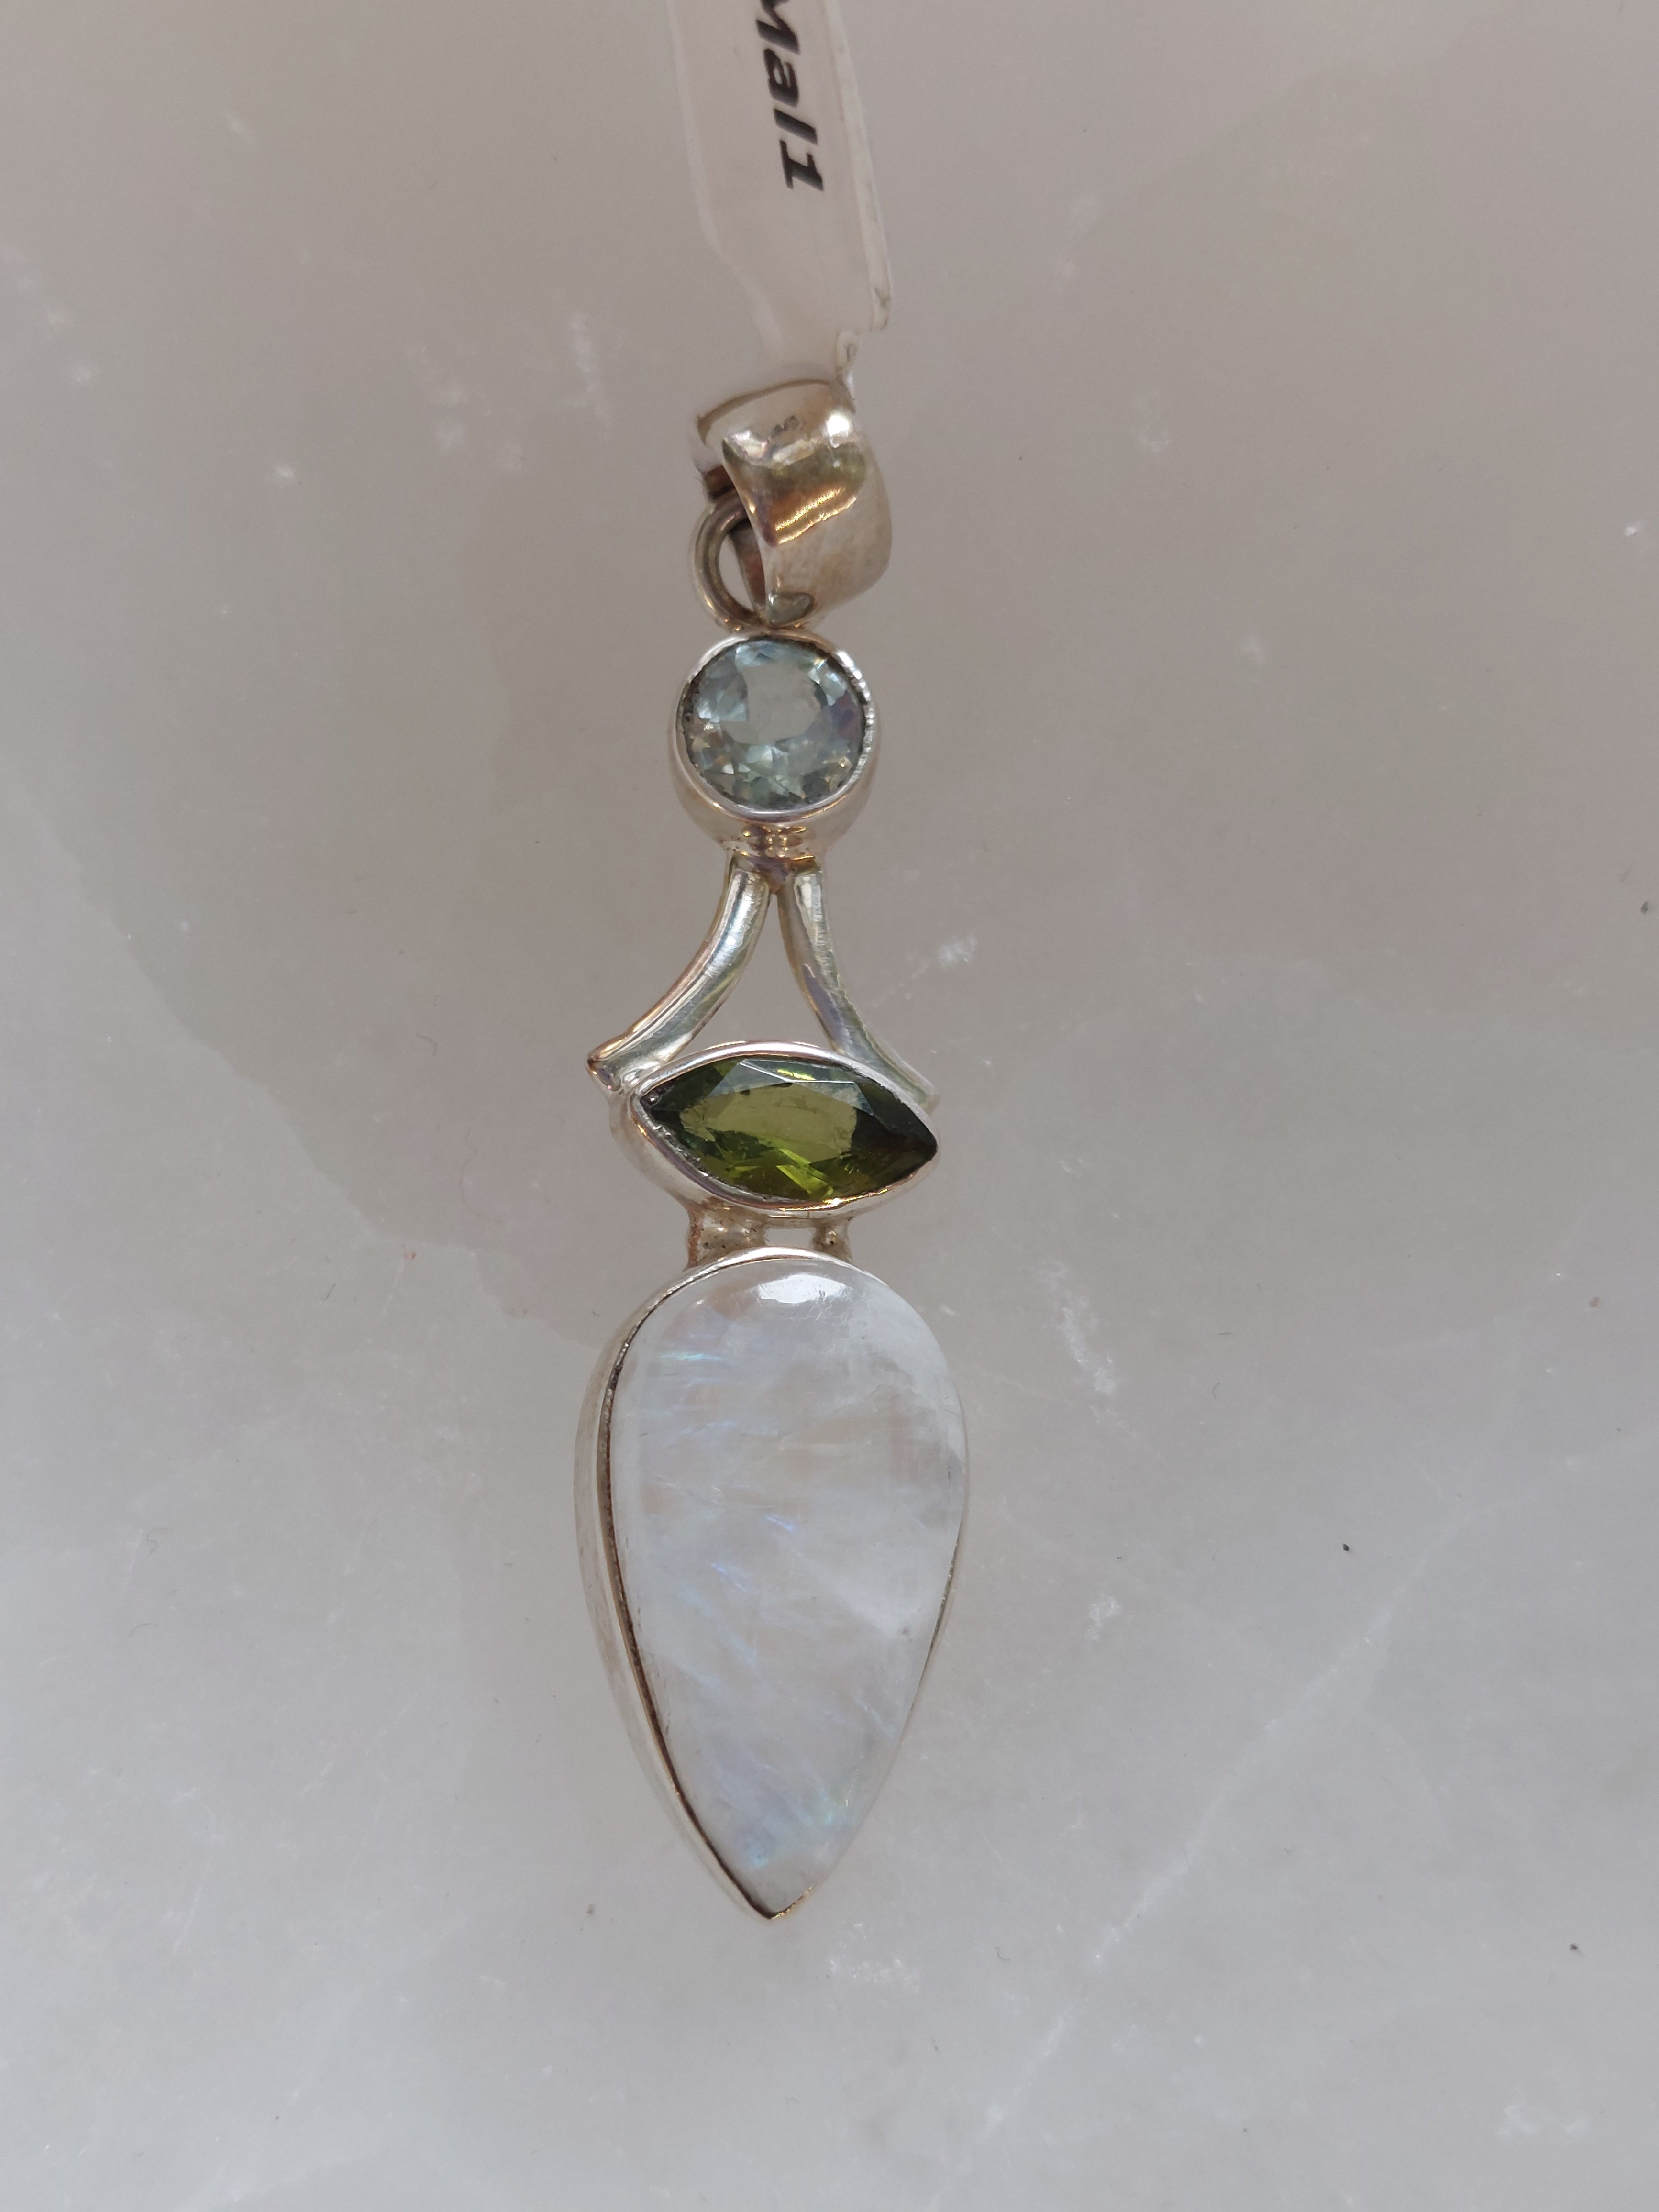 Aquamarine, Peridot and Moonstone Pendant - 925 Sterling Silver